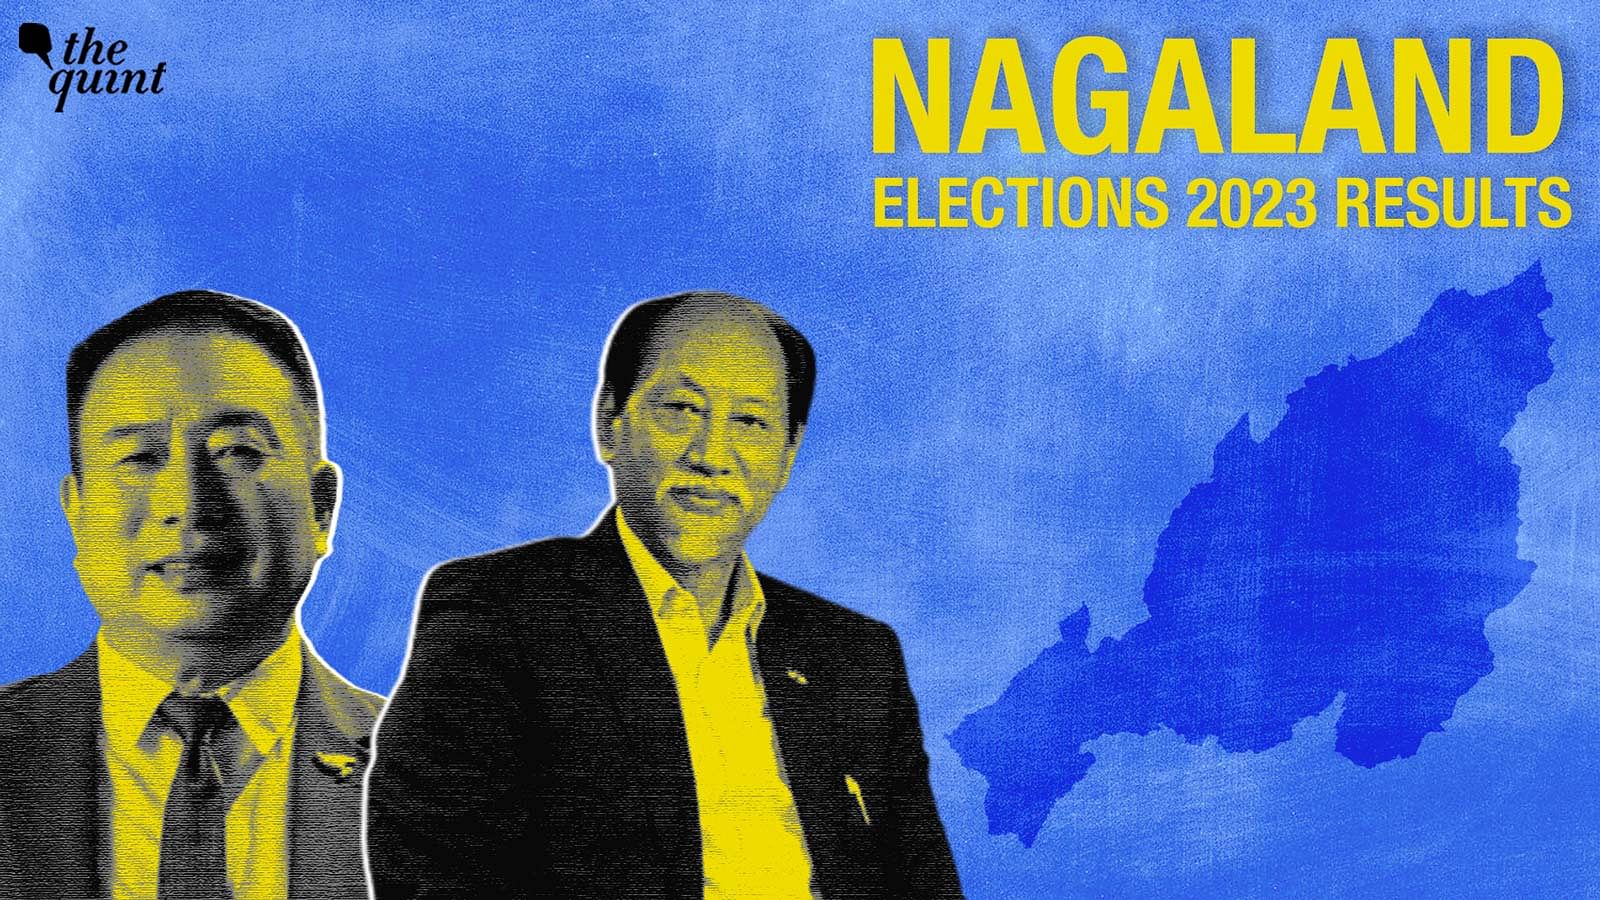 <div class="paragraphs"><p>Live updates of Nagaland Assembly Elections 2023 Result.&nbsp;</p></div>